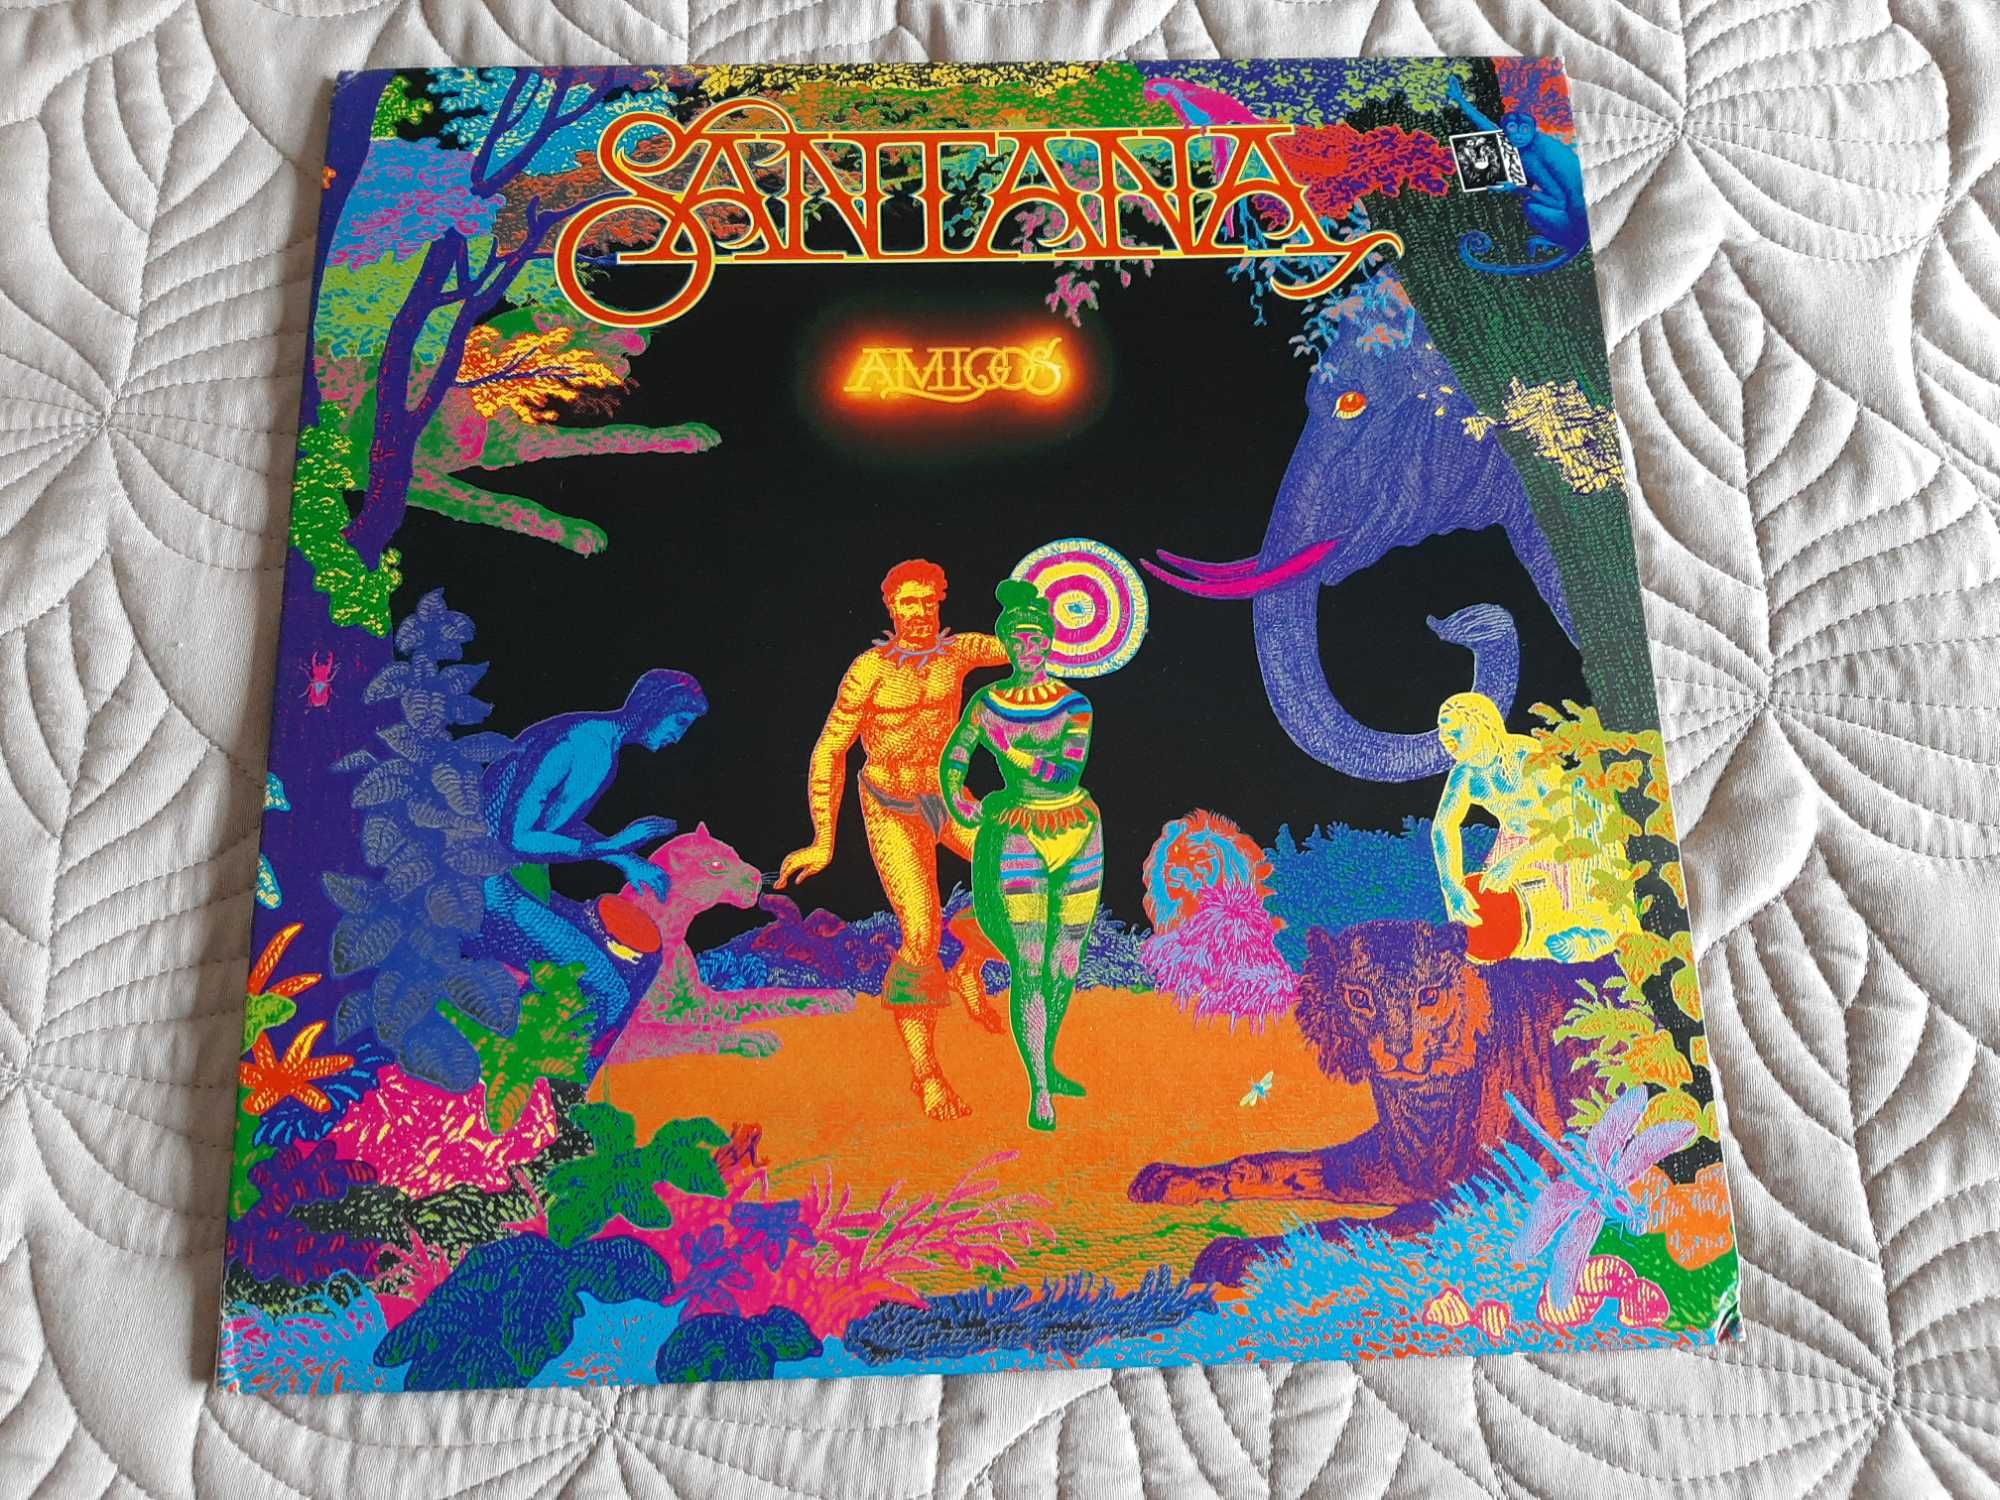 Santana – Amigos – Japão – Vinil LP